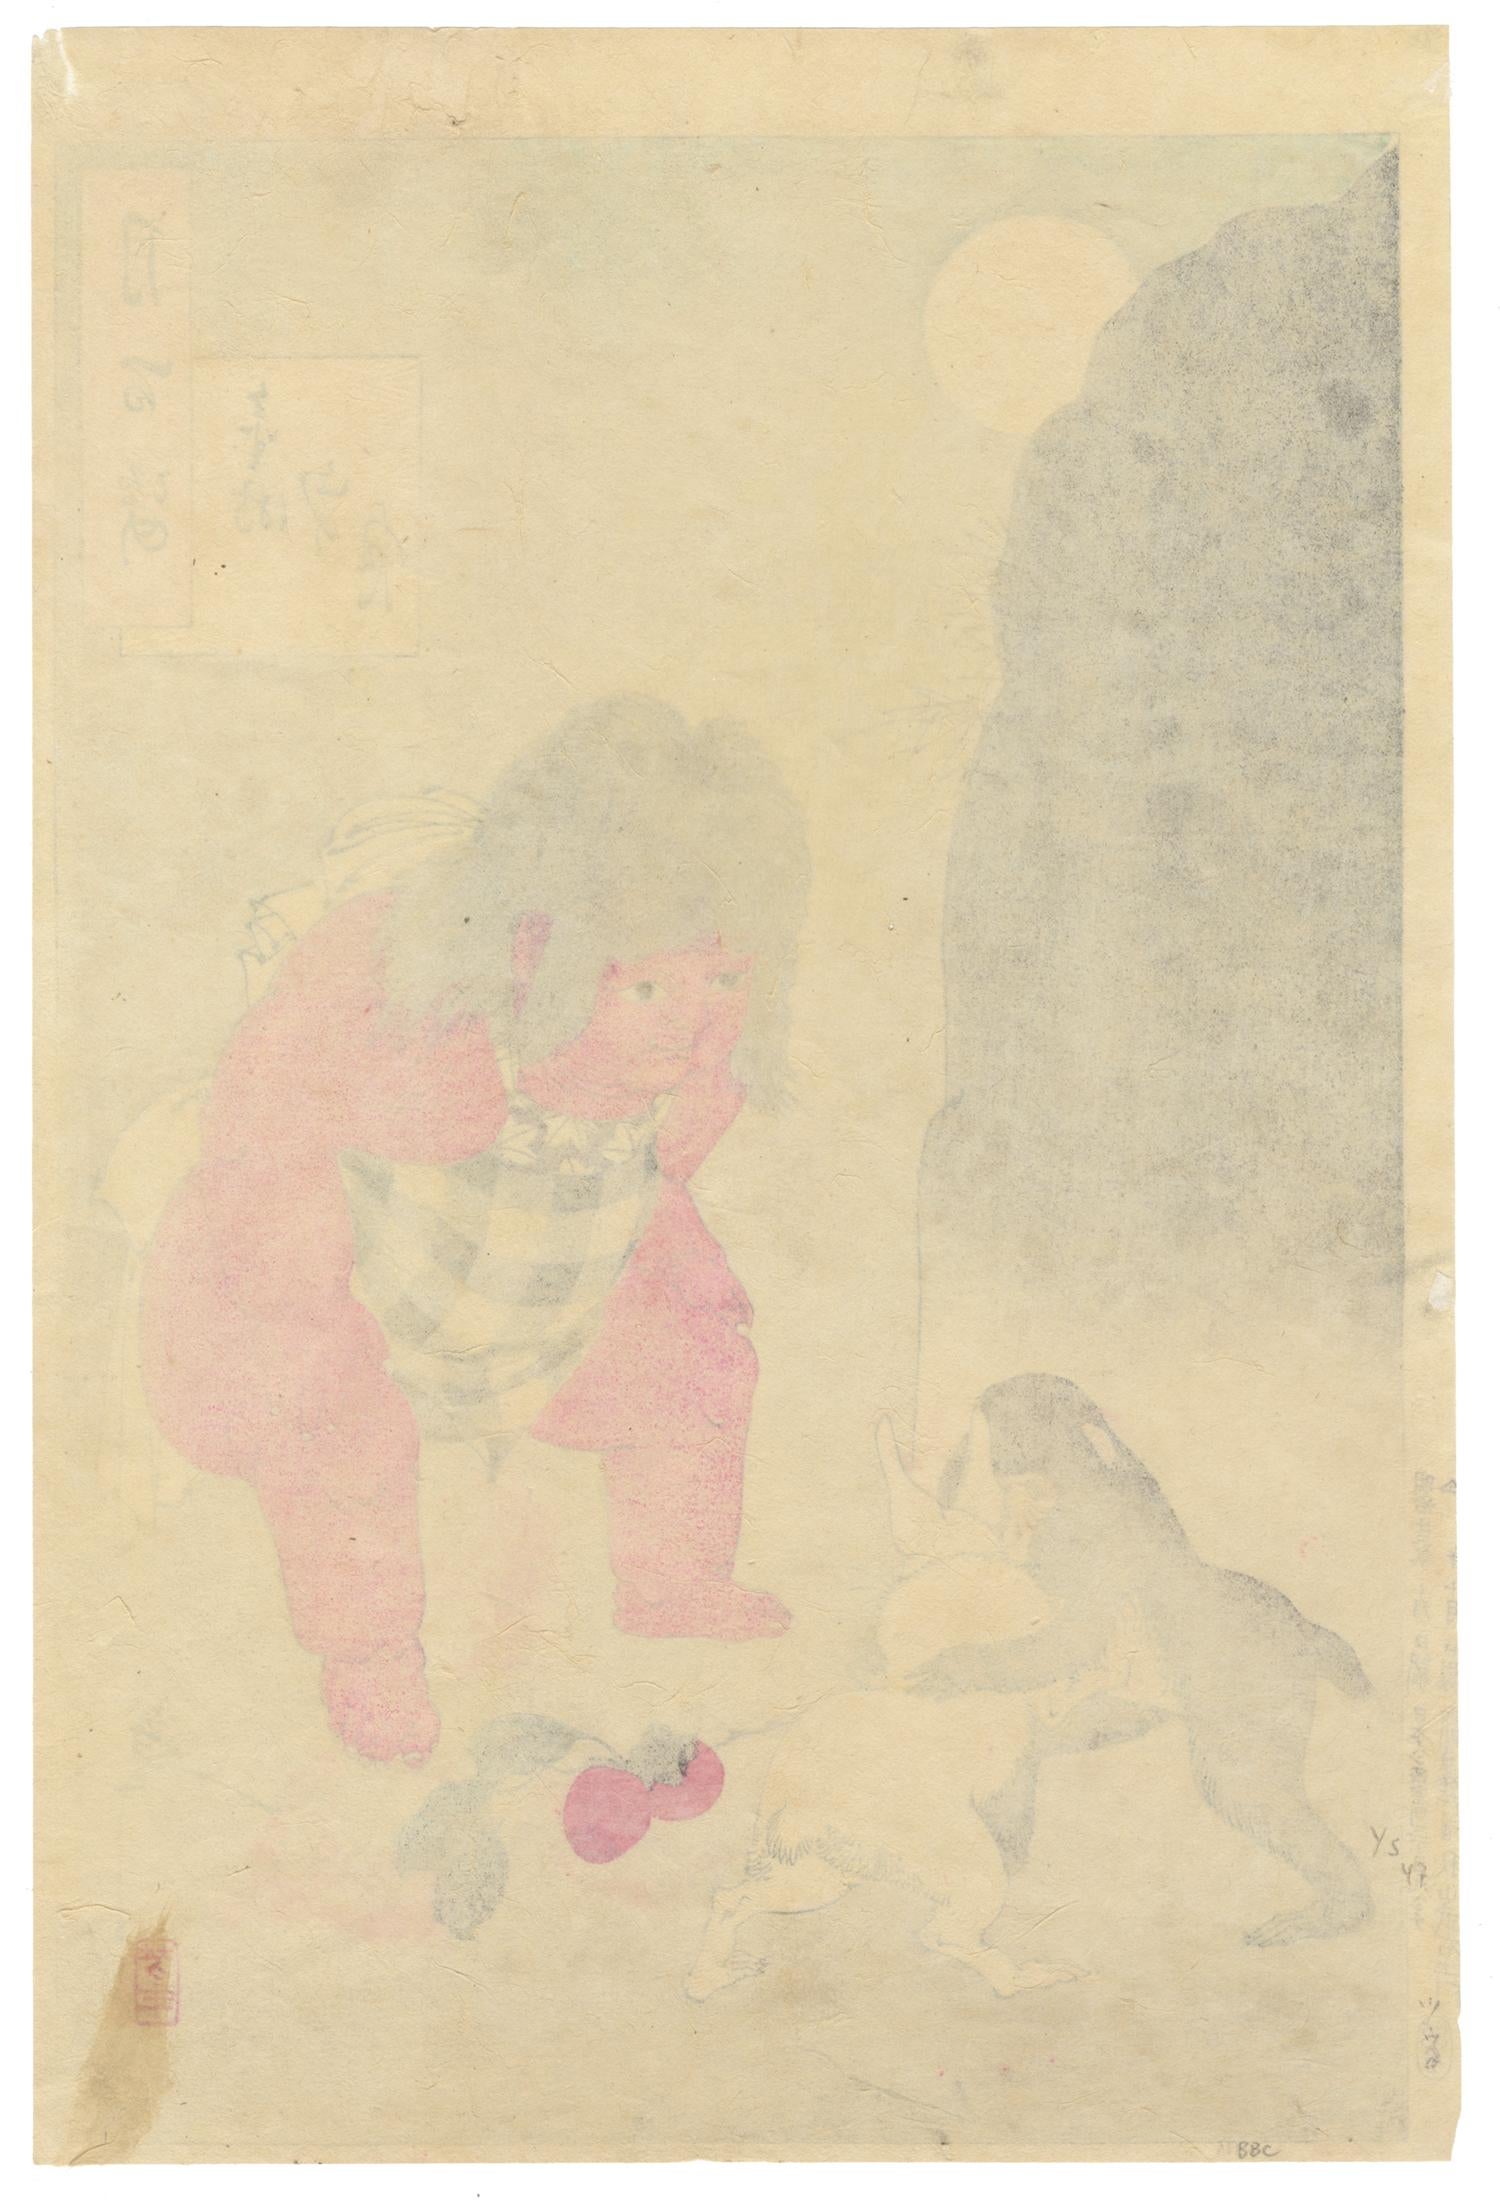 Artist: Yoshitoshi Tsukioka (1839-1892)
Title: 87. Moon of Kintoki's Mountain
Series: One Hundred Aspects of the Moon
Publisher: Akiyama Buemon
Date: 1890
Dimensions: 23.4 x 35 cm.

Kintaro, the 'golden boy', looks over a wrestling match